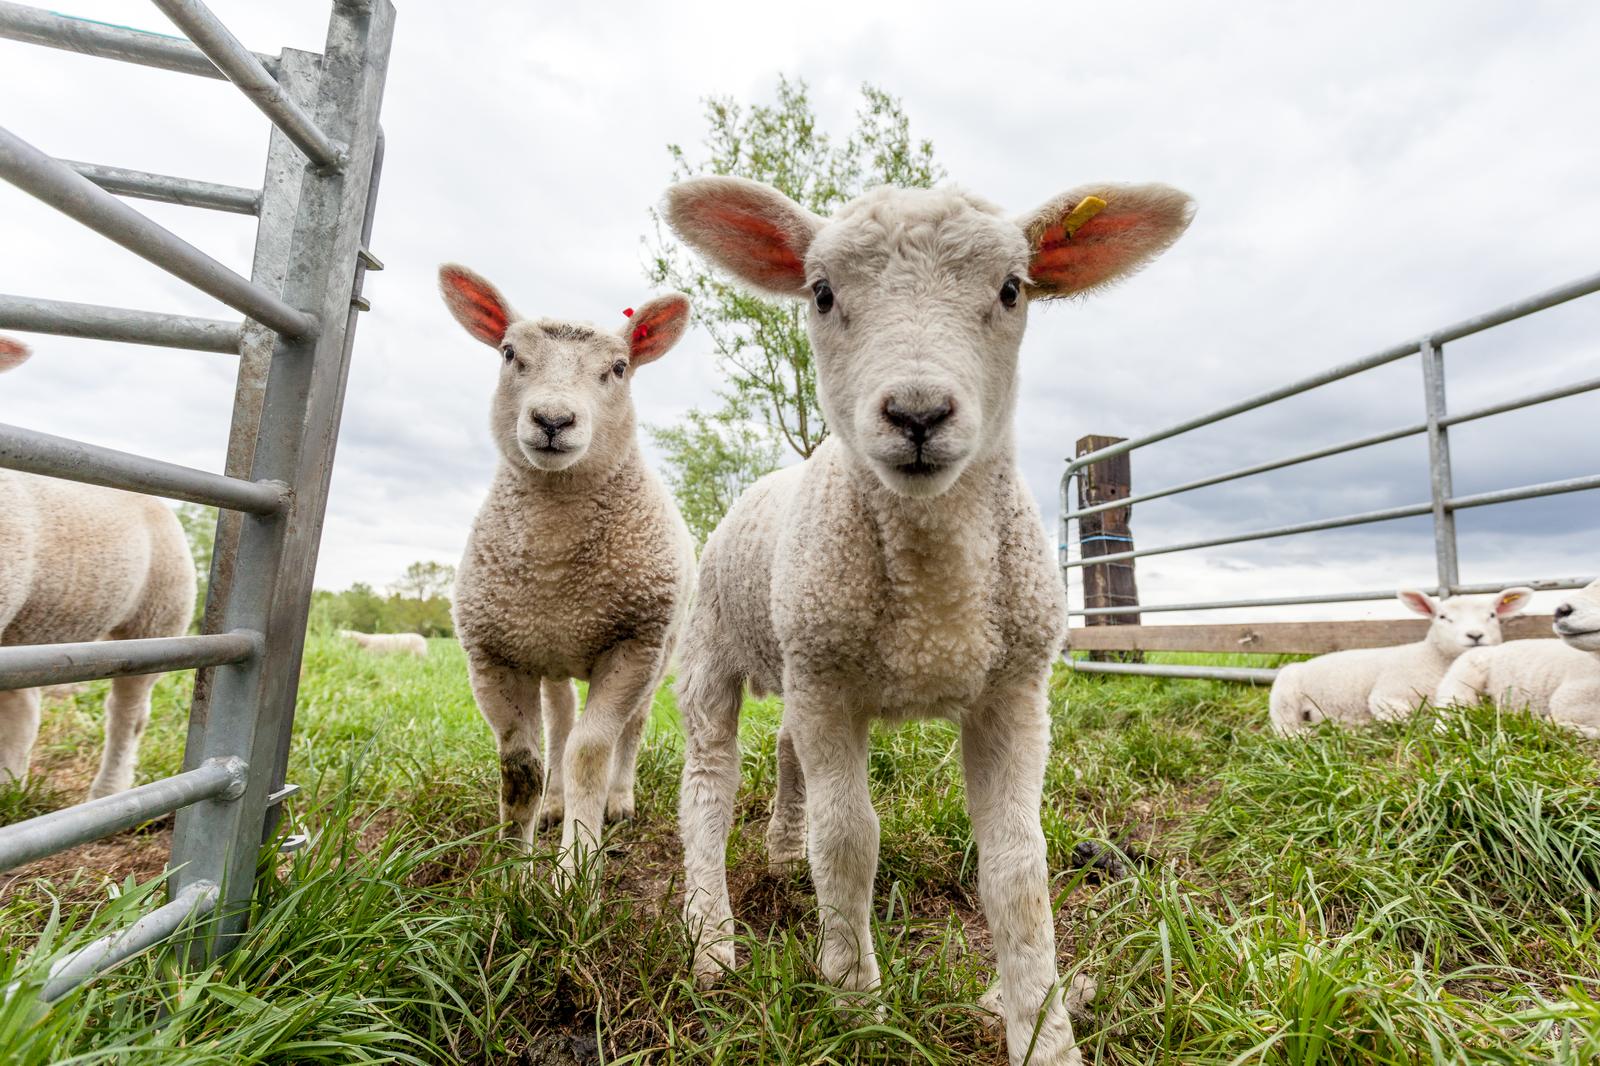 RITA TSARJOV FIE - Raising of sheep and goats in Hiiu county